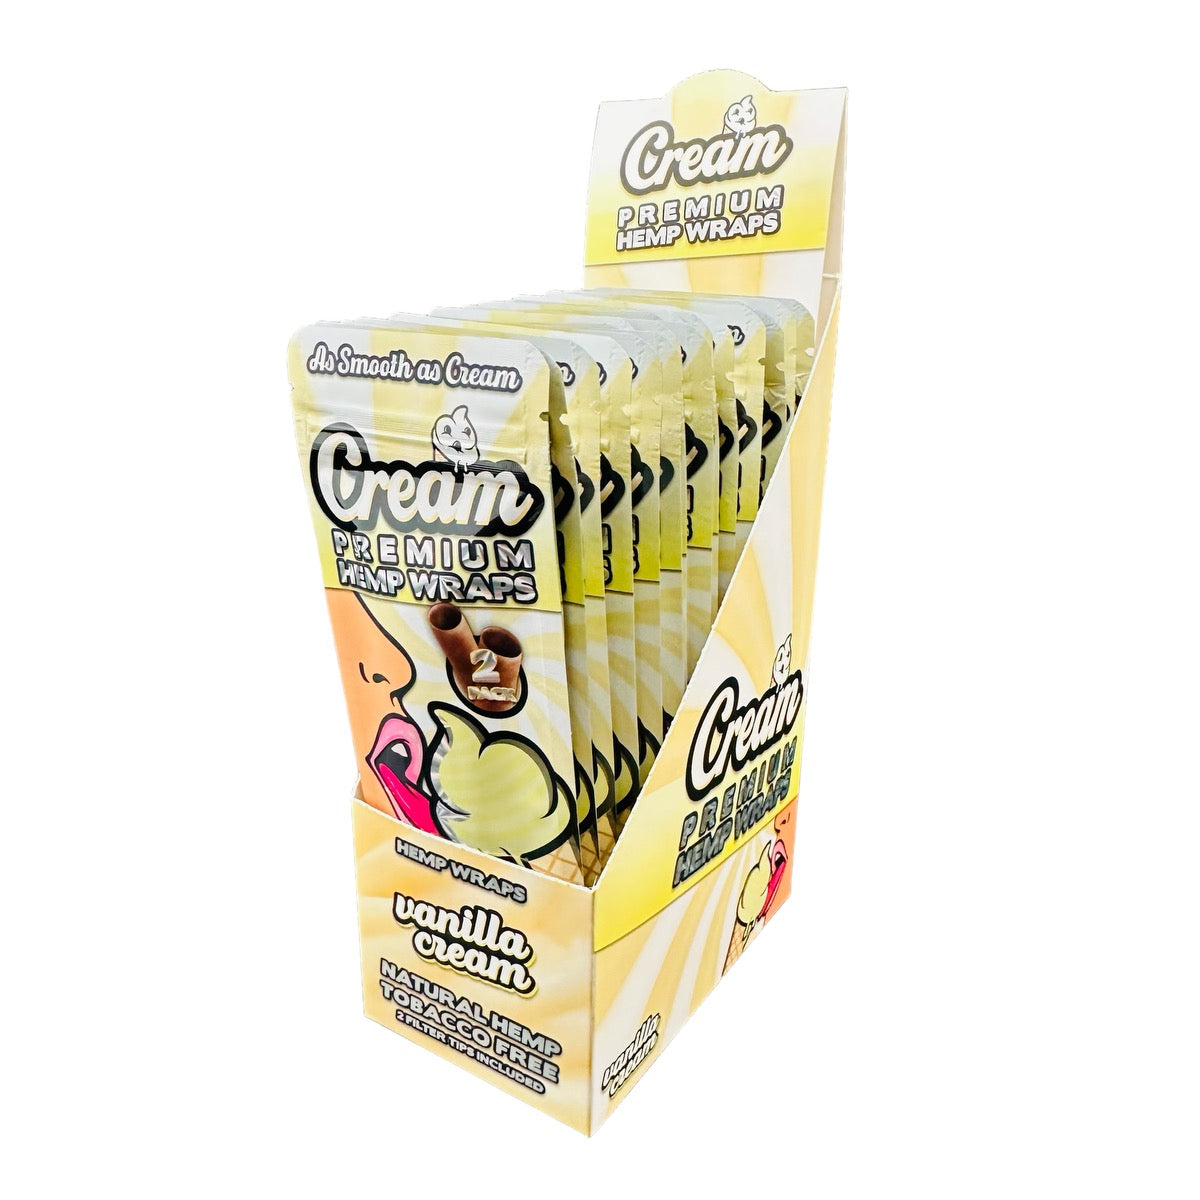 Cream Premium Hemp Wraps, 2 Per Pack, Box of 25 Packs (Flavor Options Available) (B2B)